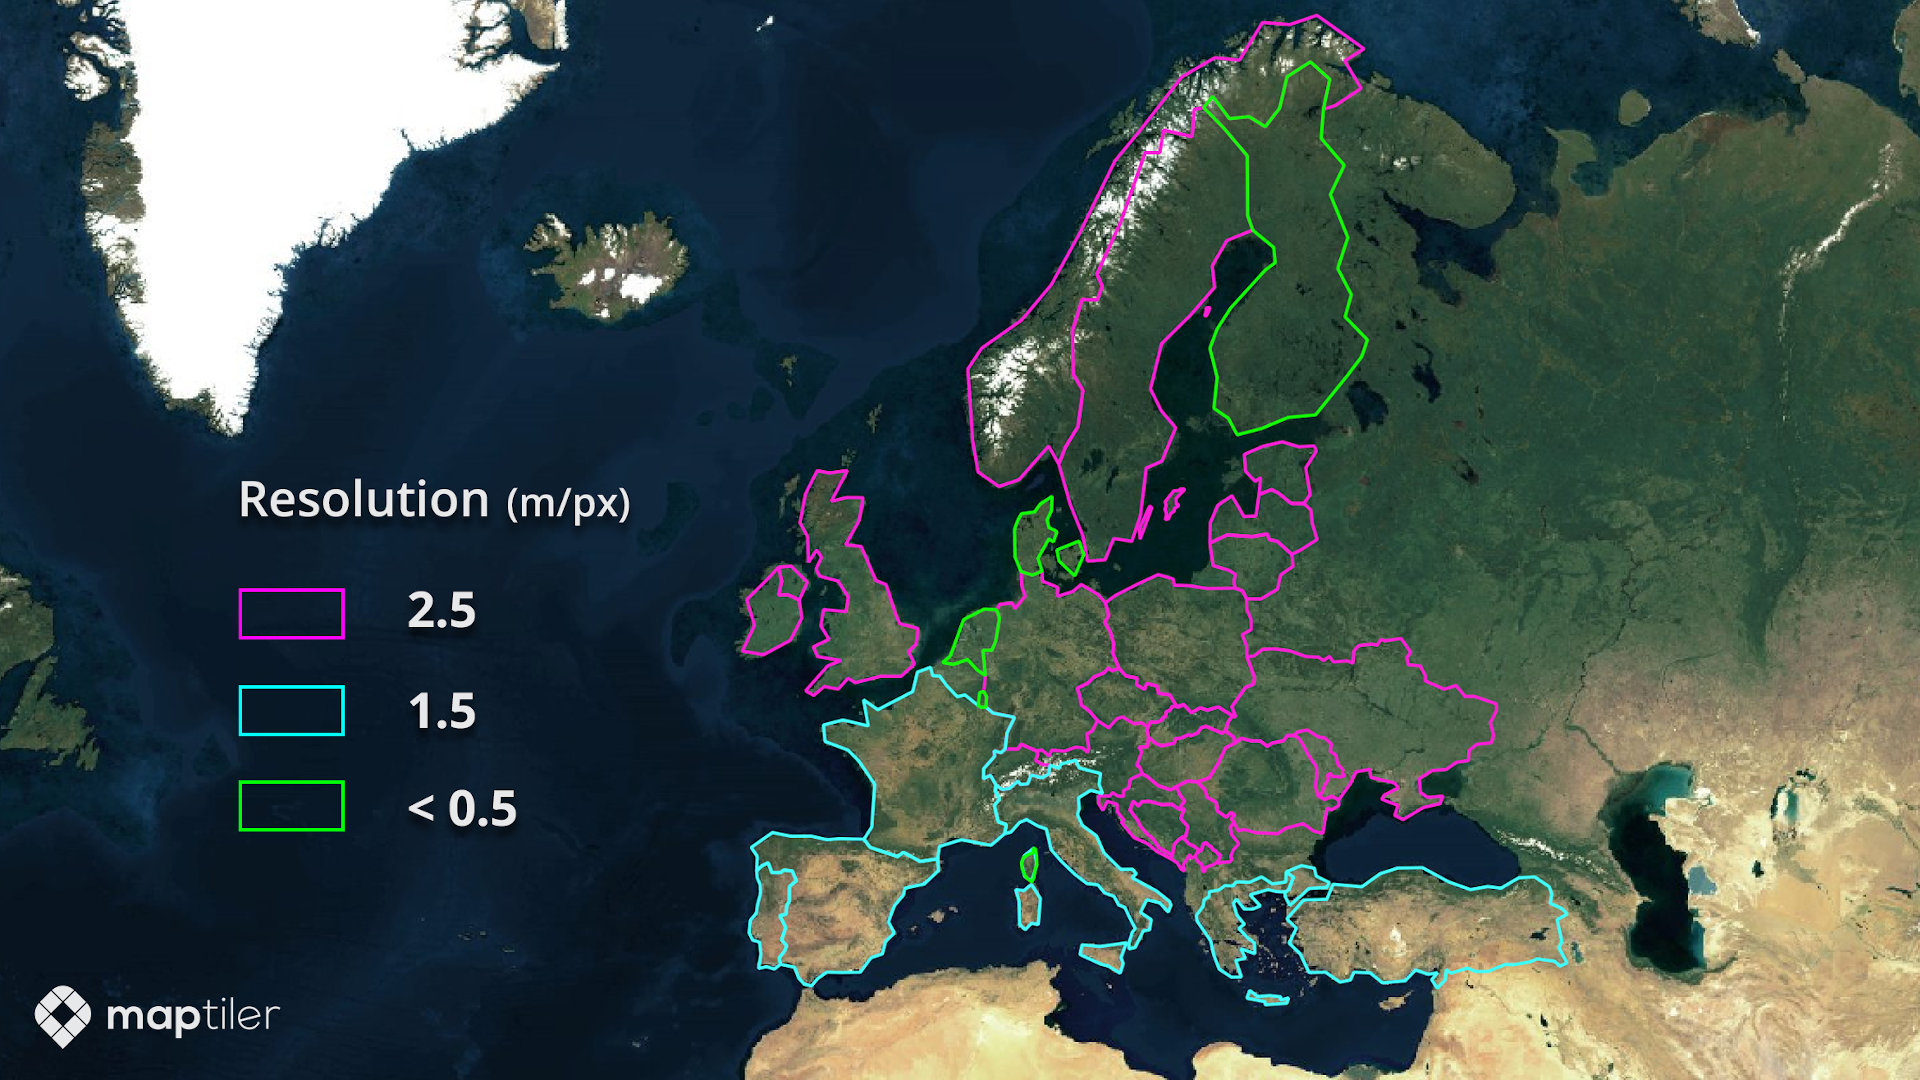 MapTiler Satellite resolution per country, as of September 2019